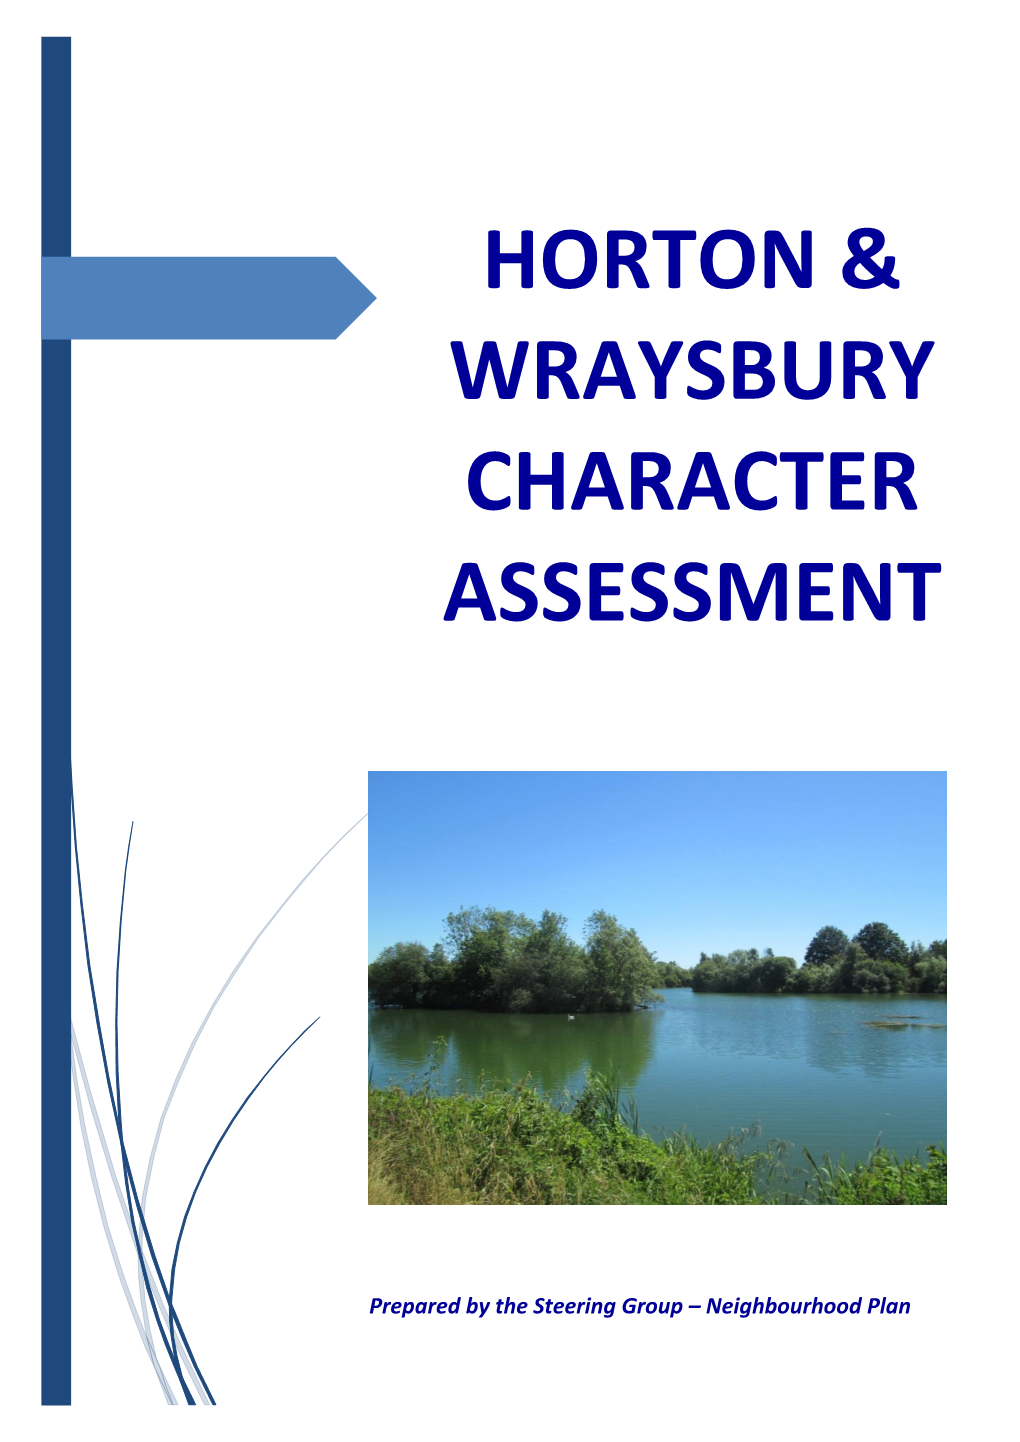 Horton & Wraysbury Character Assessment